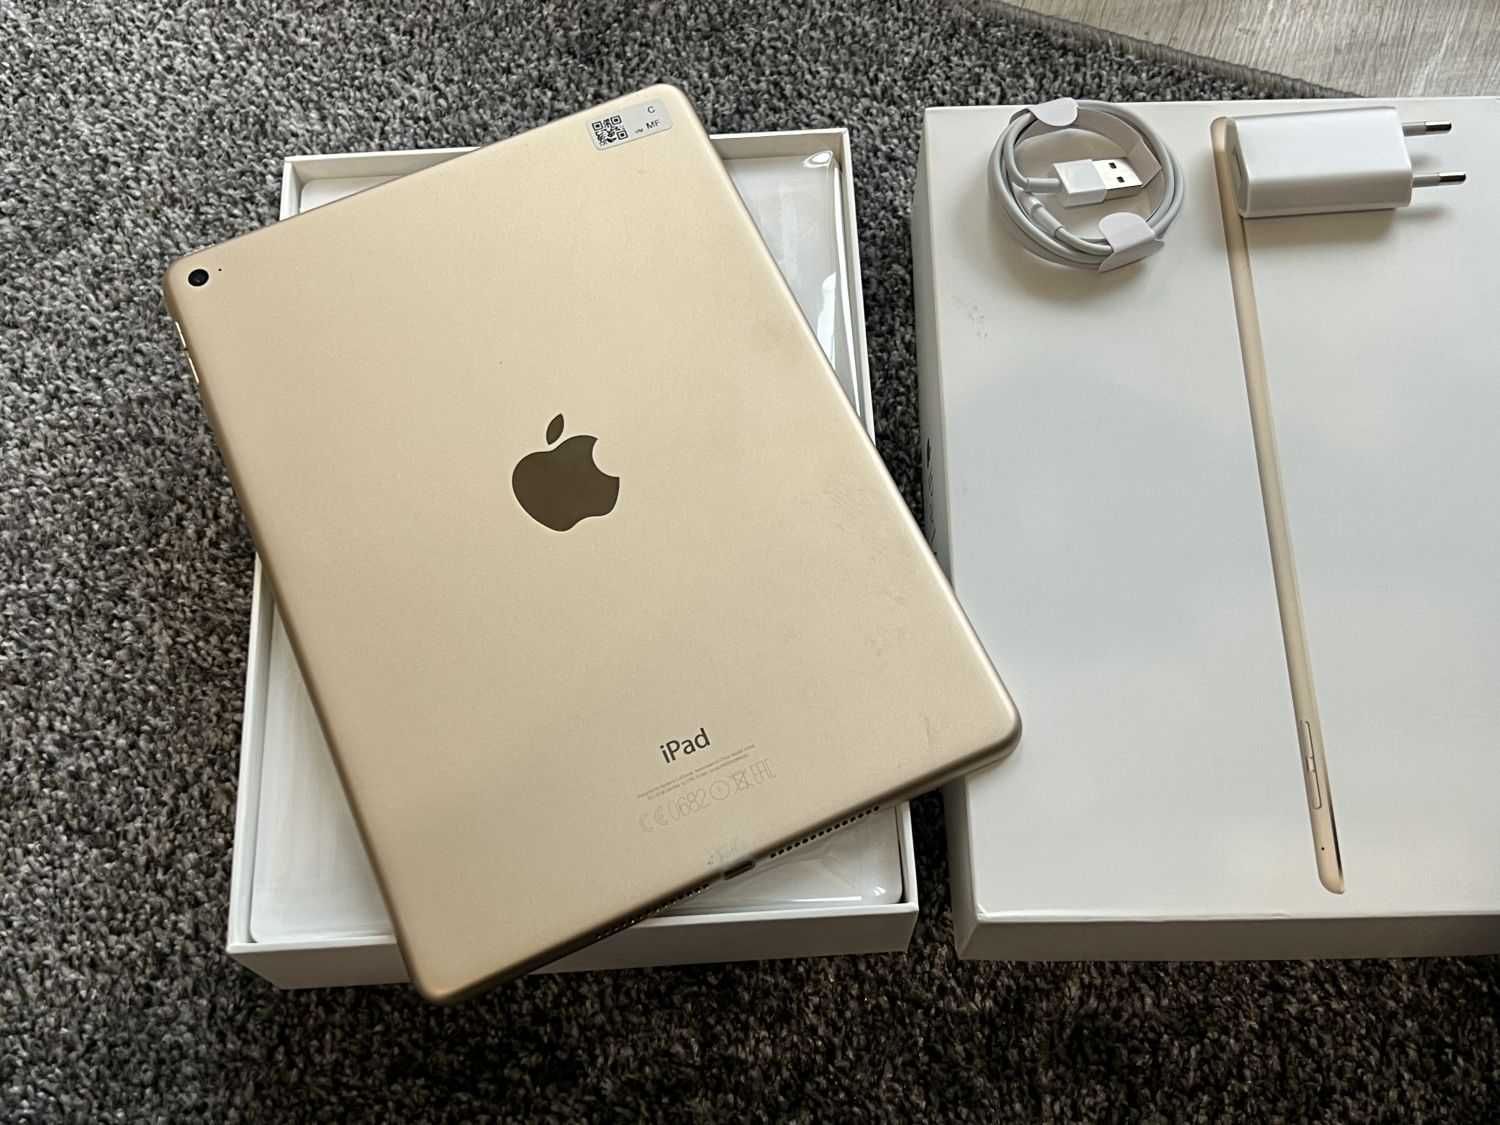 Tablet Apple iPad Air 2 32GB GOLD ZŁOTY Gwarancja faktura